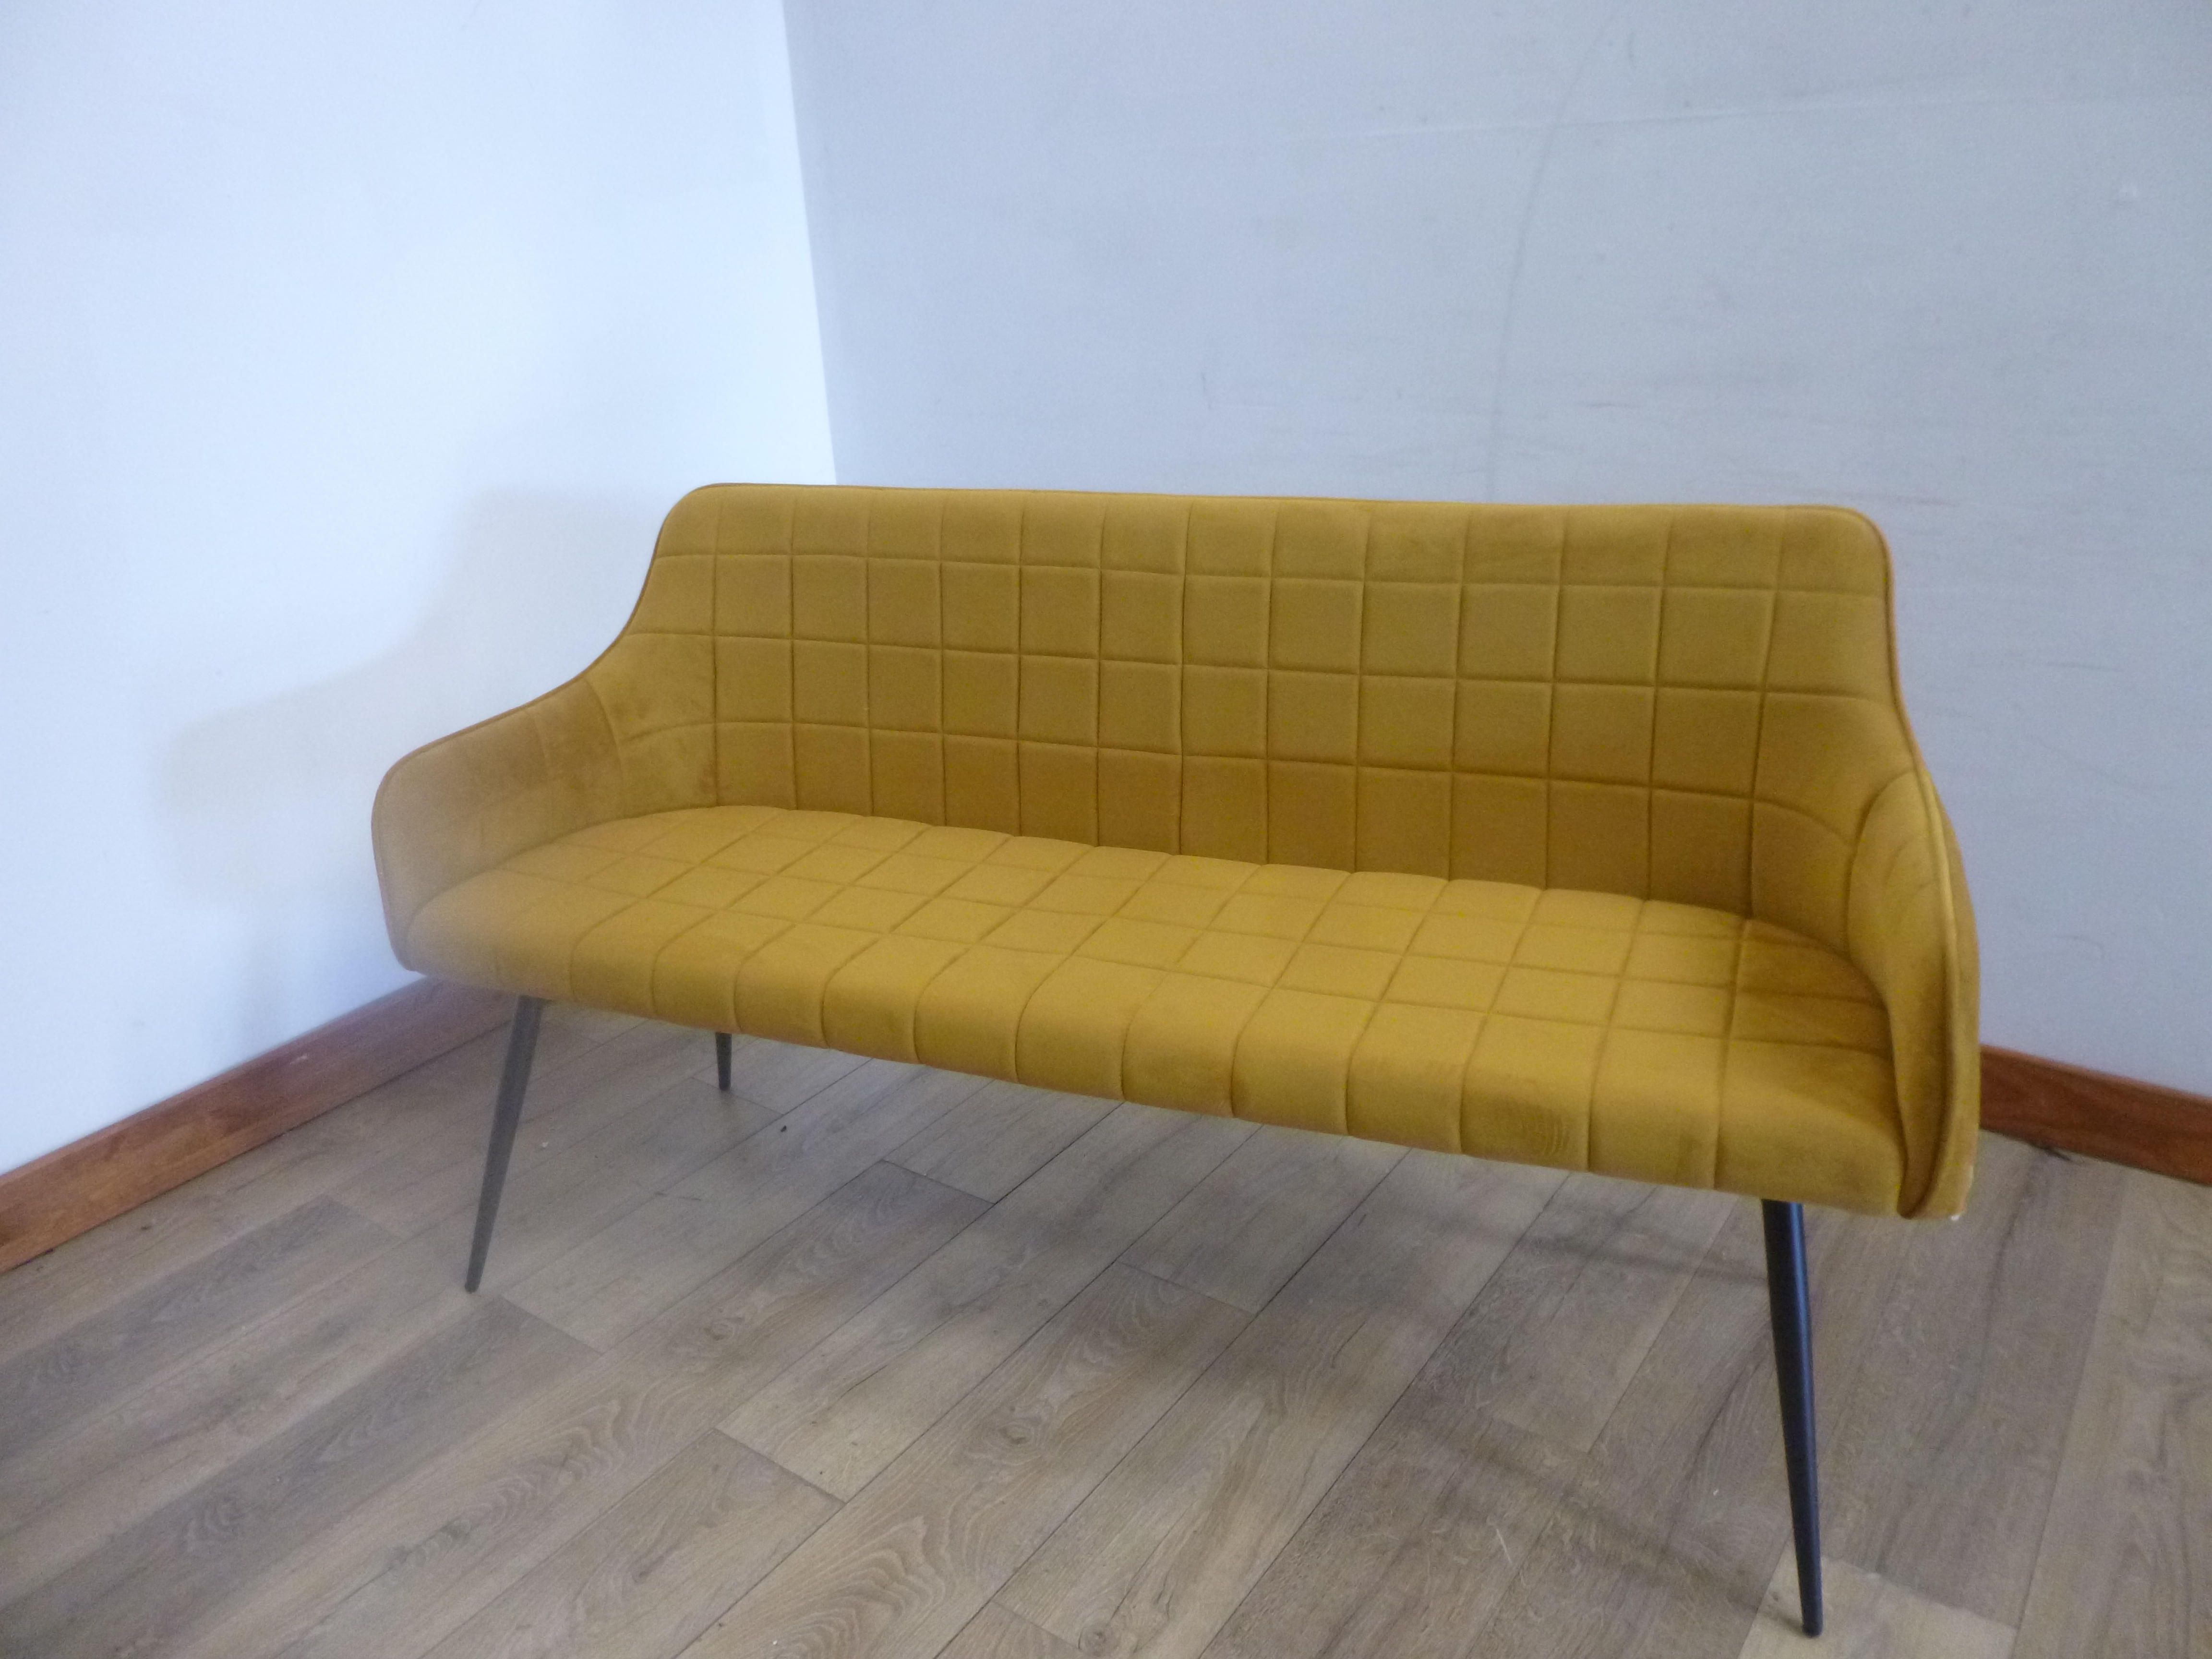 Mustard Sofa